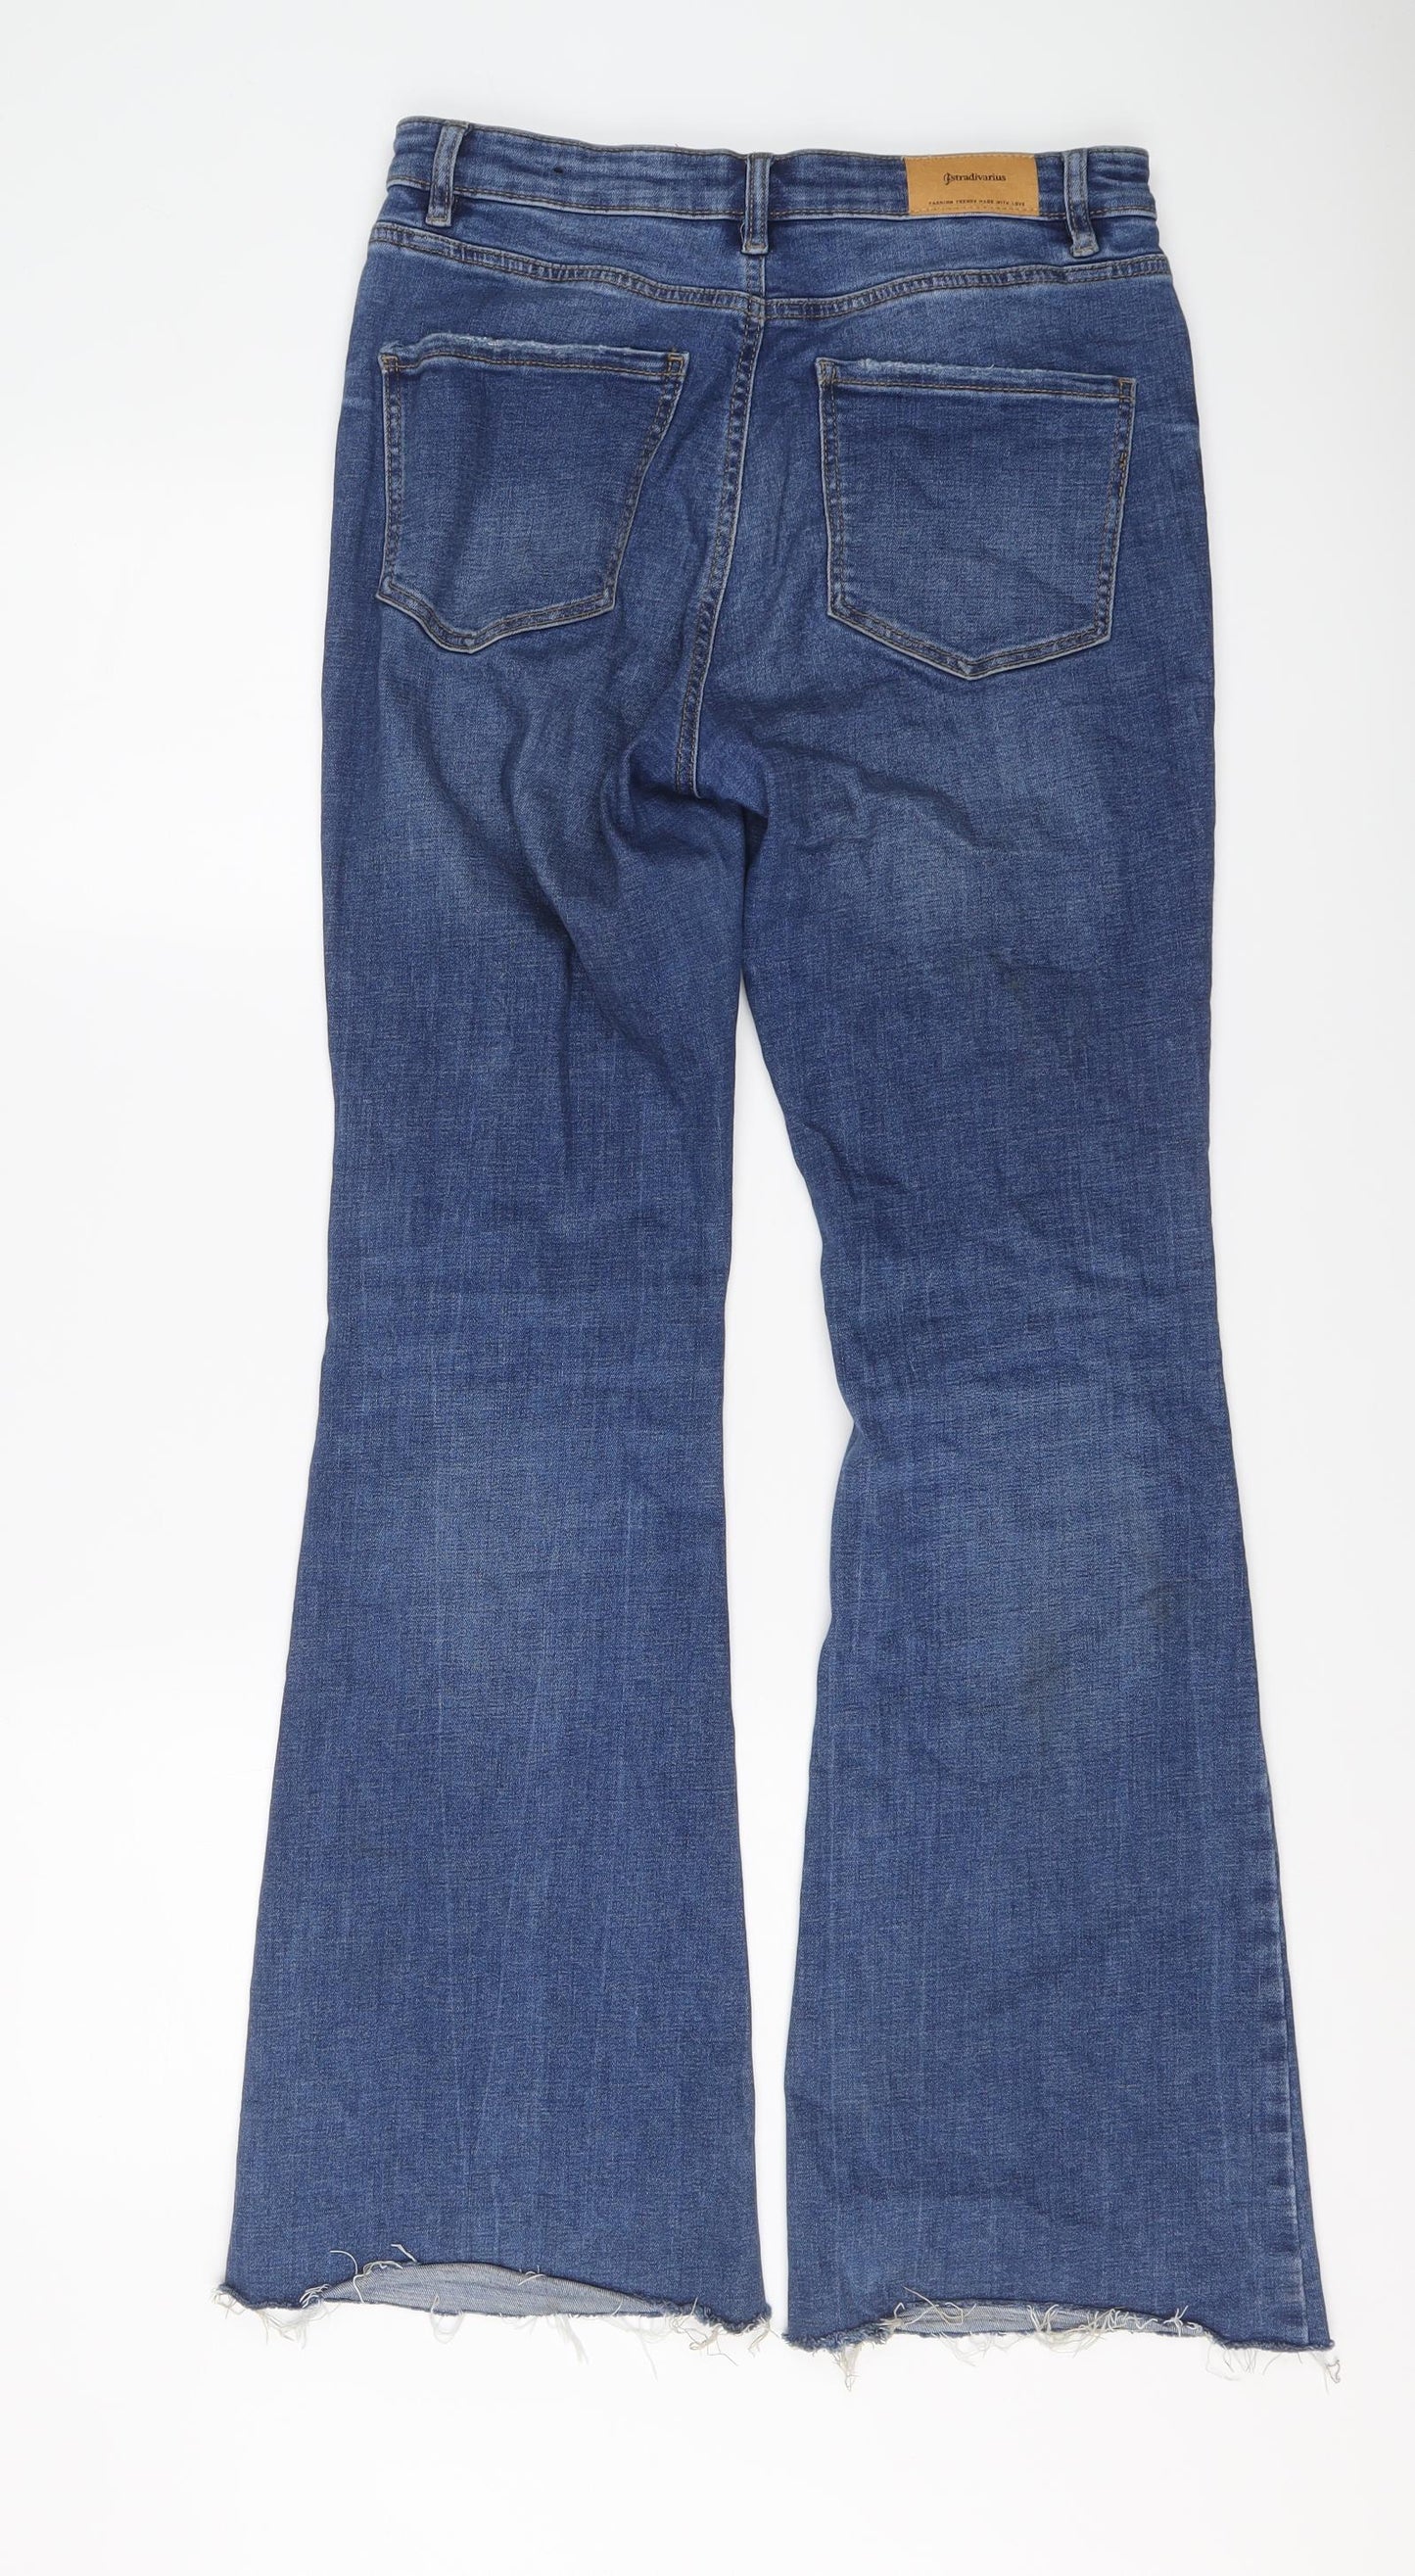 Stradivarius Womens Blue Cotton Flared Jeans Size 14 L30 in Regular Button - Frayed Hem